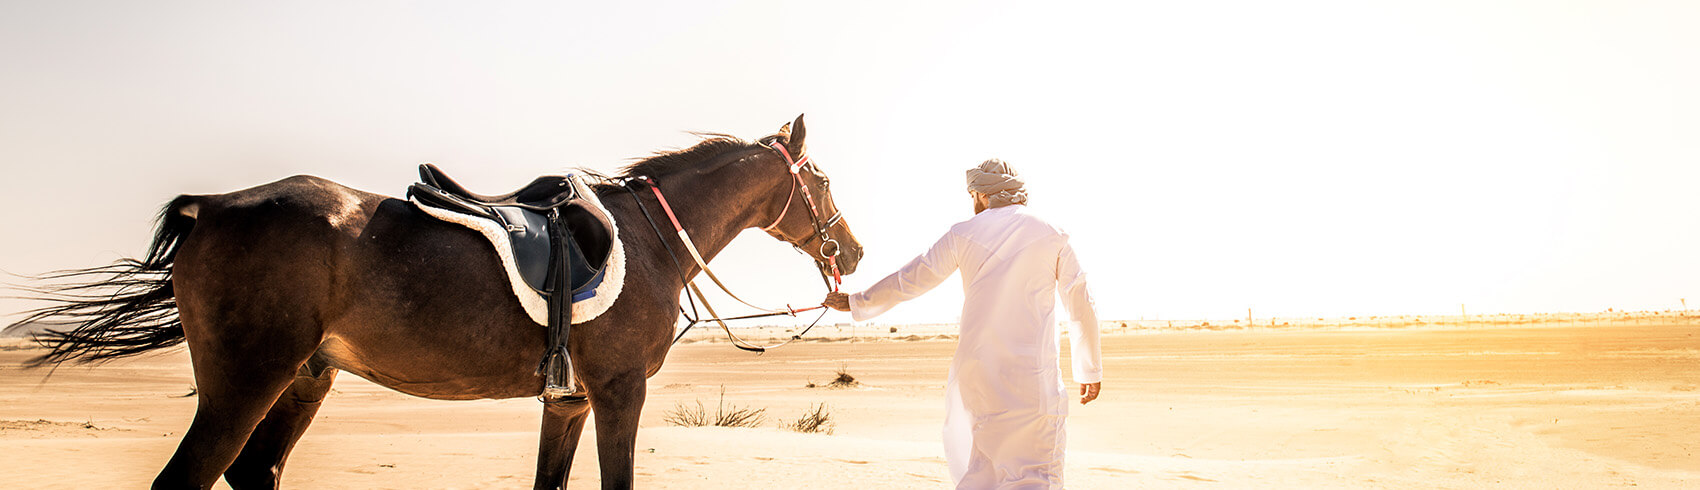 Horse Riding in Dubai